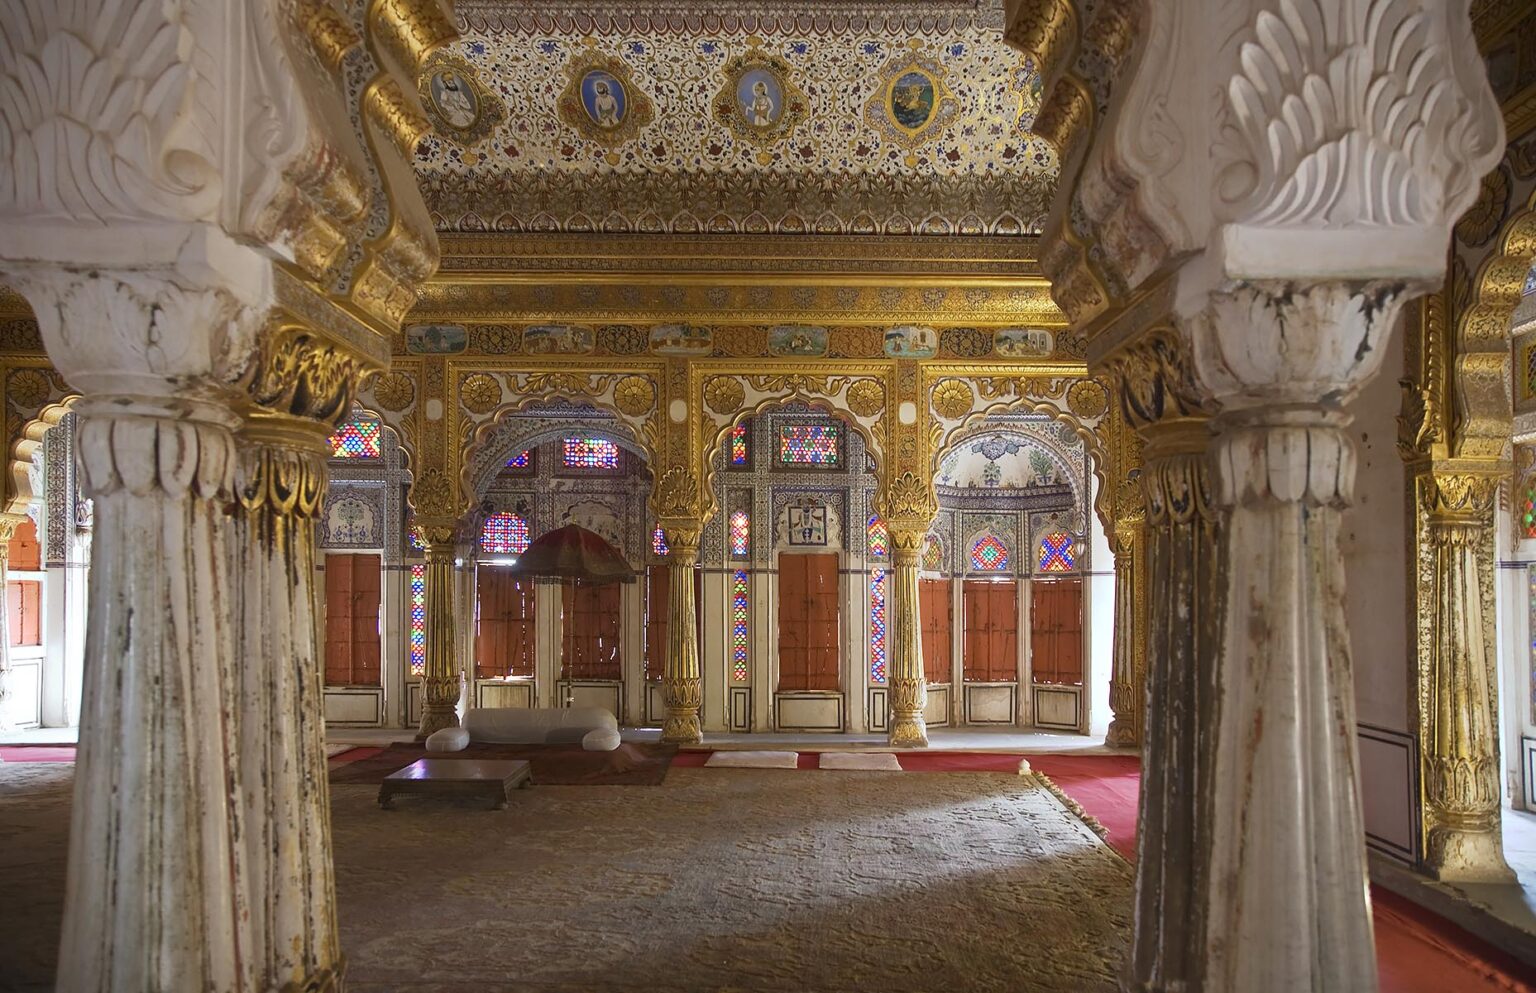 The PHOOL MAHAL or FLOWER PALACE of MEHERANGARH FORT built by Maharaja Man Singh in 1806 - RAJASTHAN, INDIA